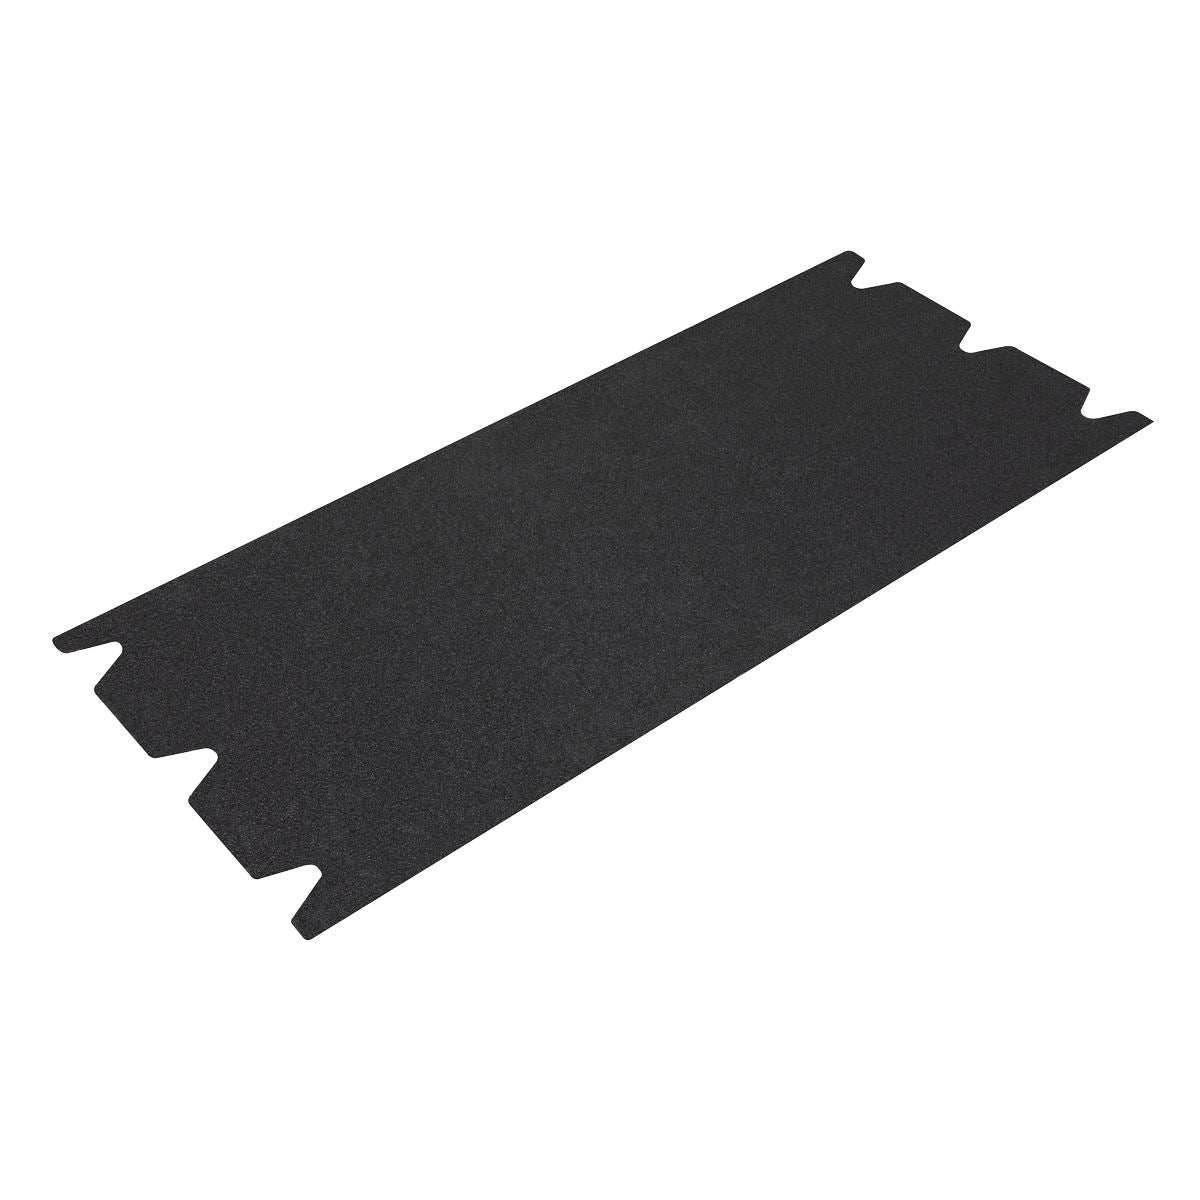 Sealey Floor Sanding Sheet 205 x 470mm 36Grit - Pack of 25